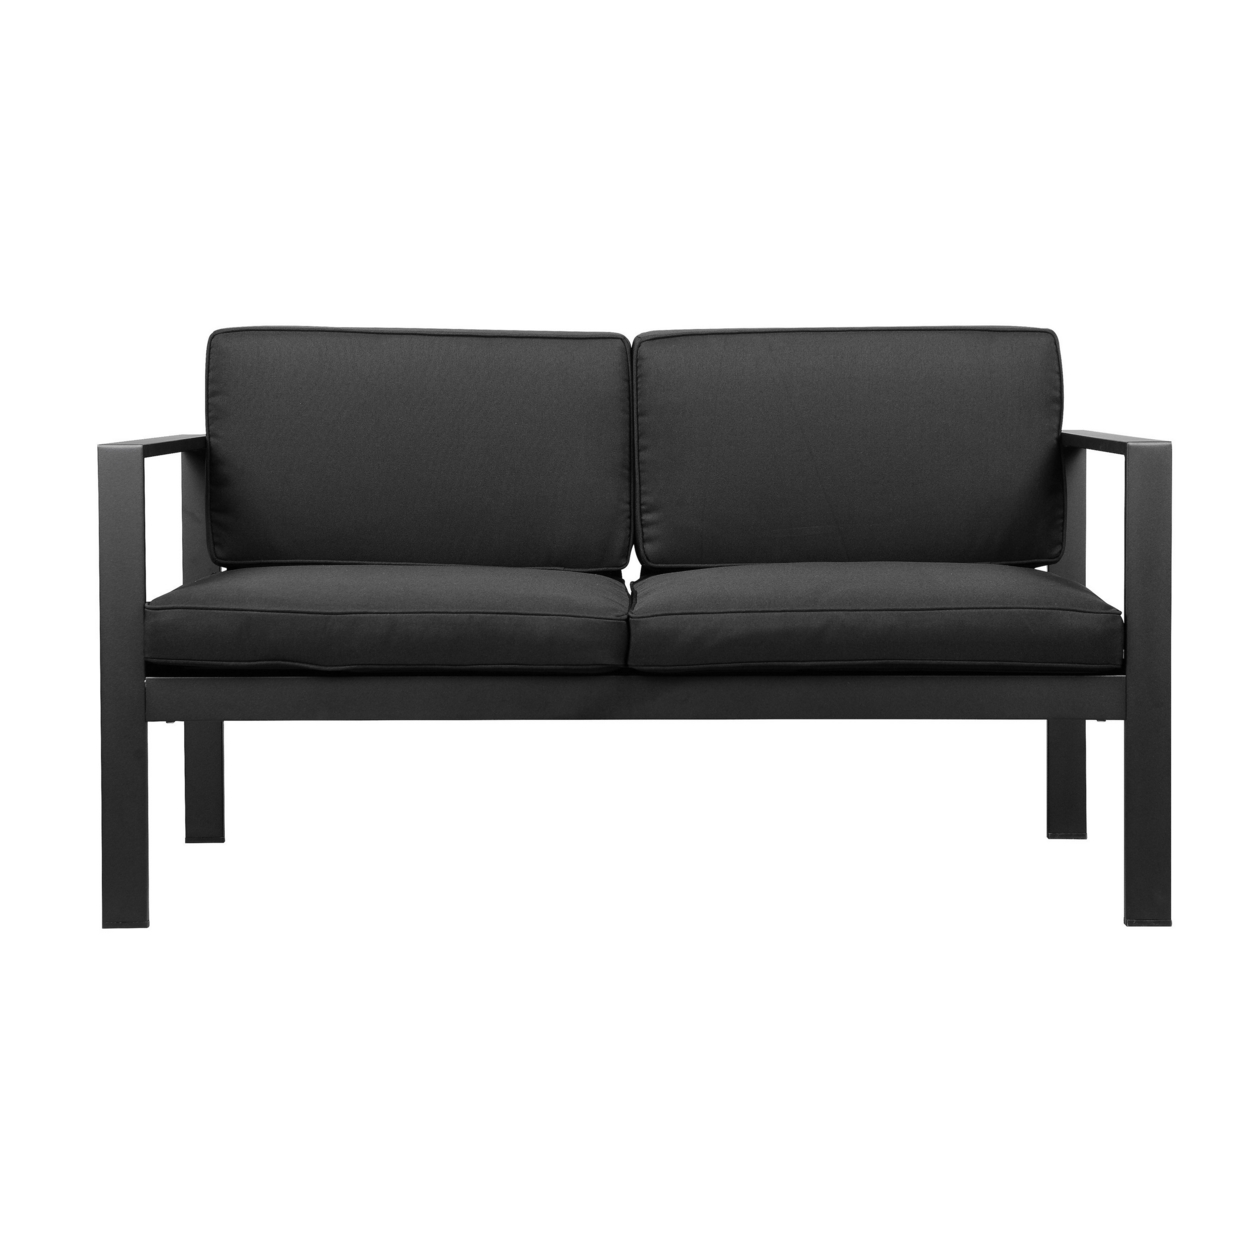 Kili 54 Inch Sofa, Jet Black Aluminum Frame, Water Resistant Cushions- Saltoro Sherpi